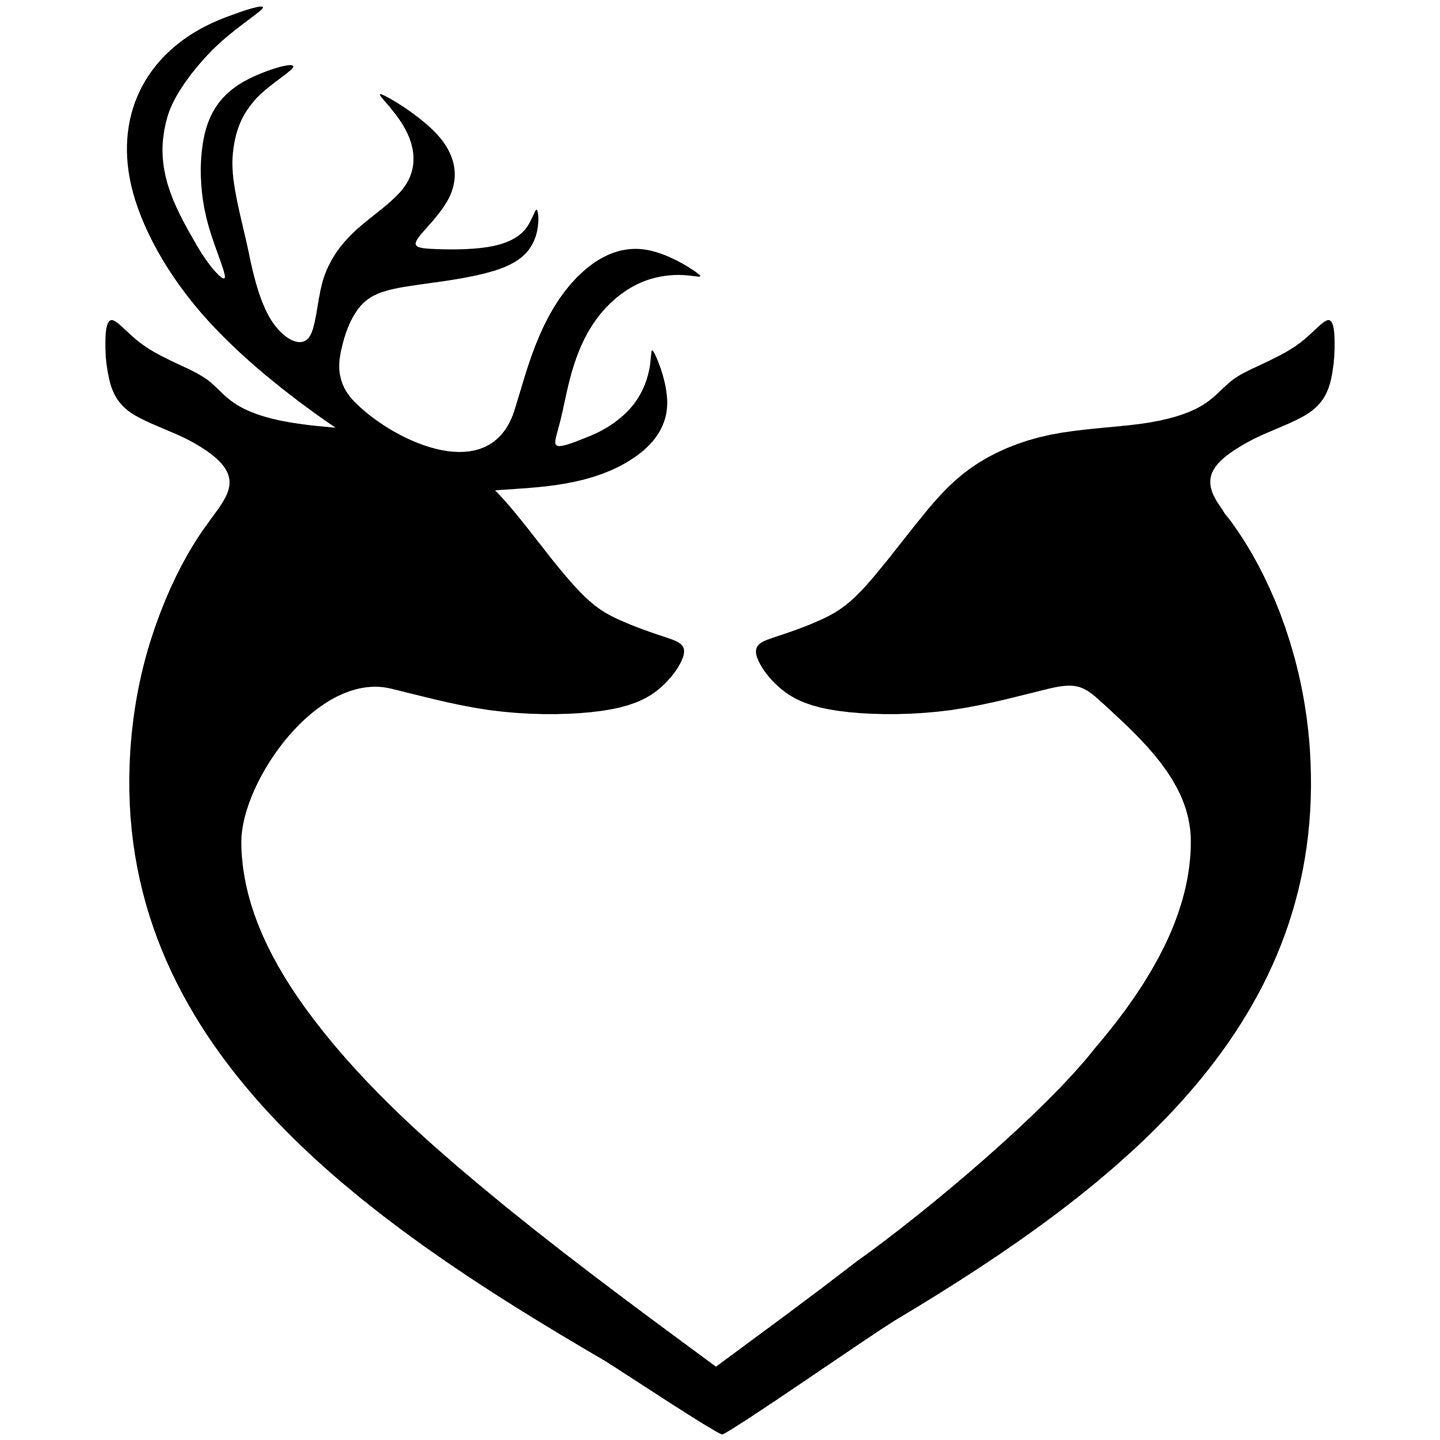 INSTANT Download - Deer Head Couple Silhouette Clip Art ...